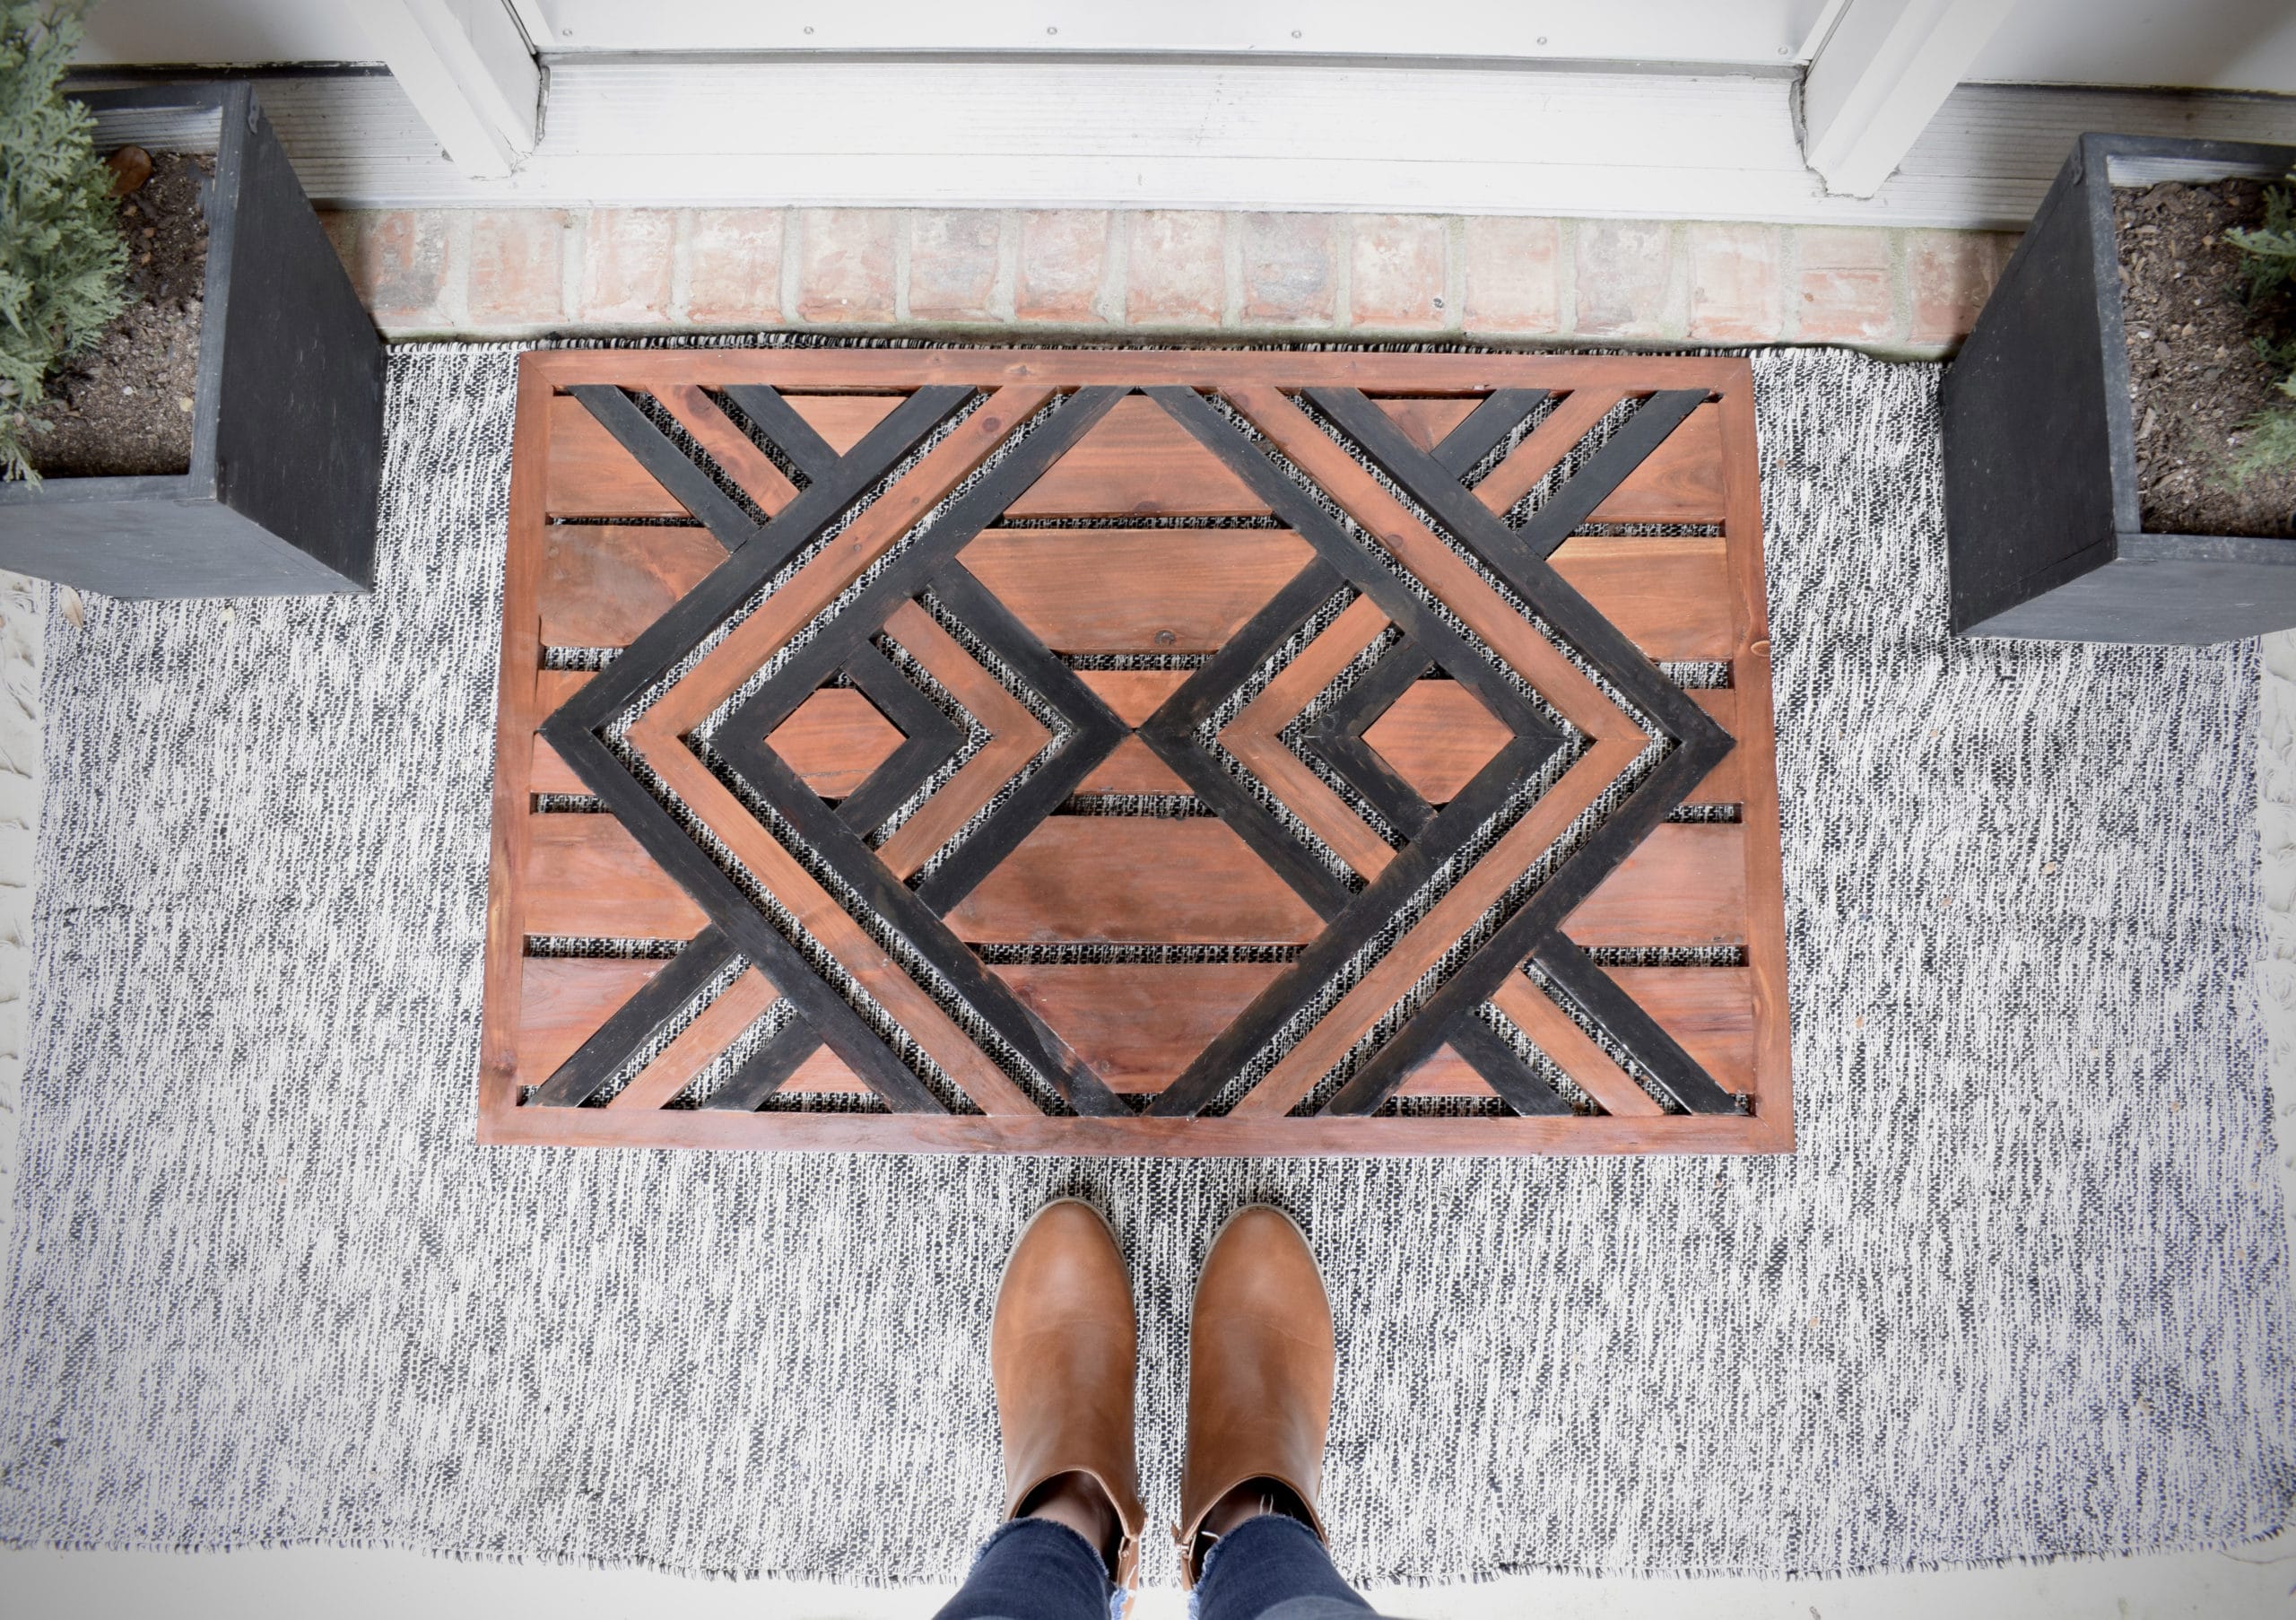 How to Make an Outdoor Wooden Mosaic Doormat